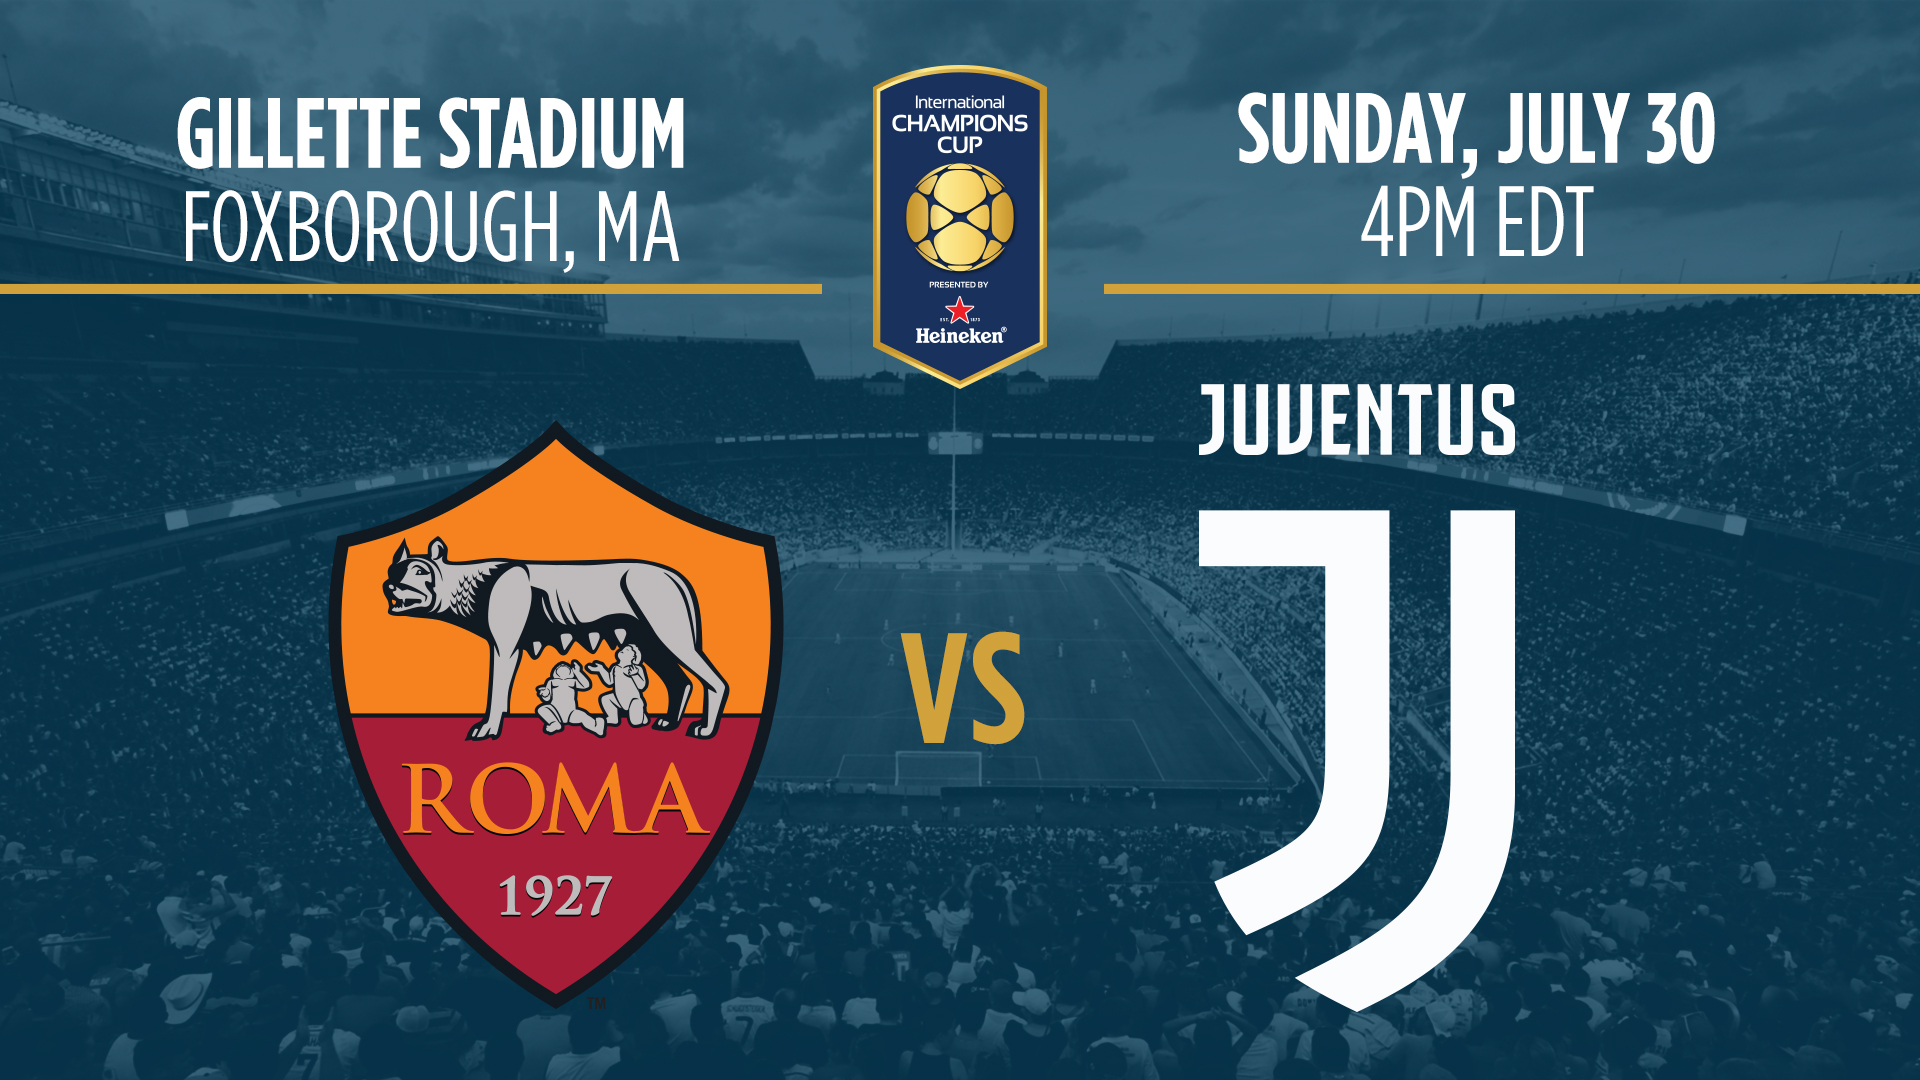 International Champions Cup: AS Roma vs Juventus [07/30/17]1920 x 1080